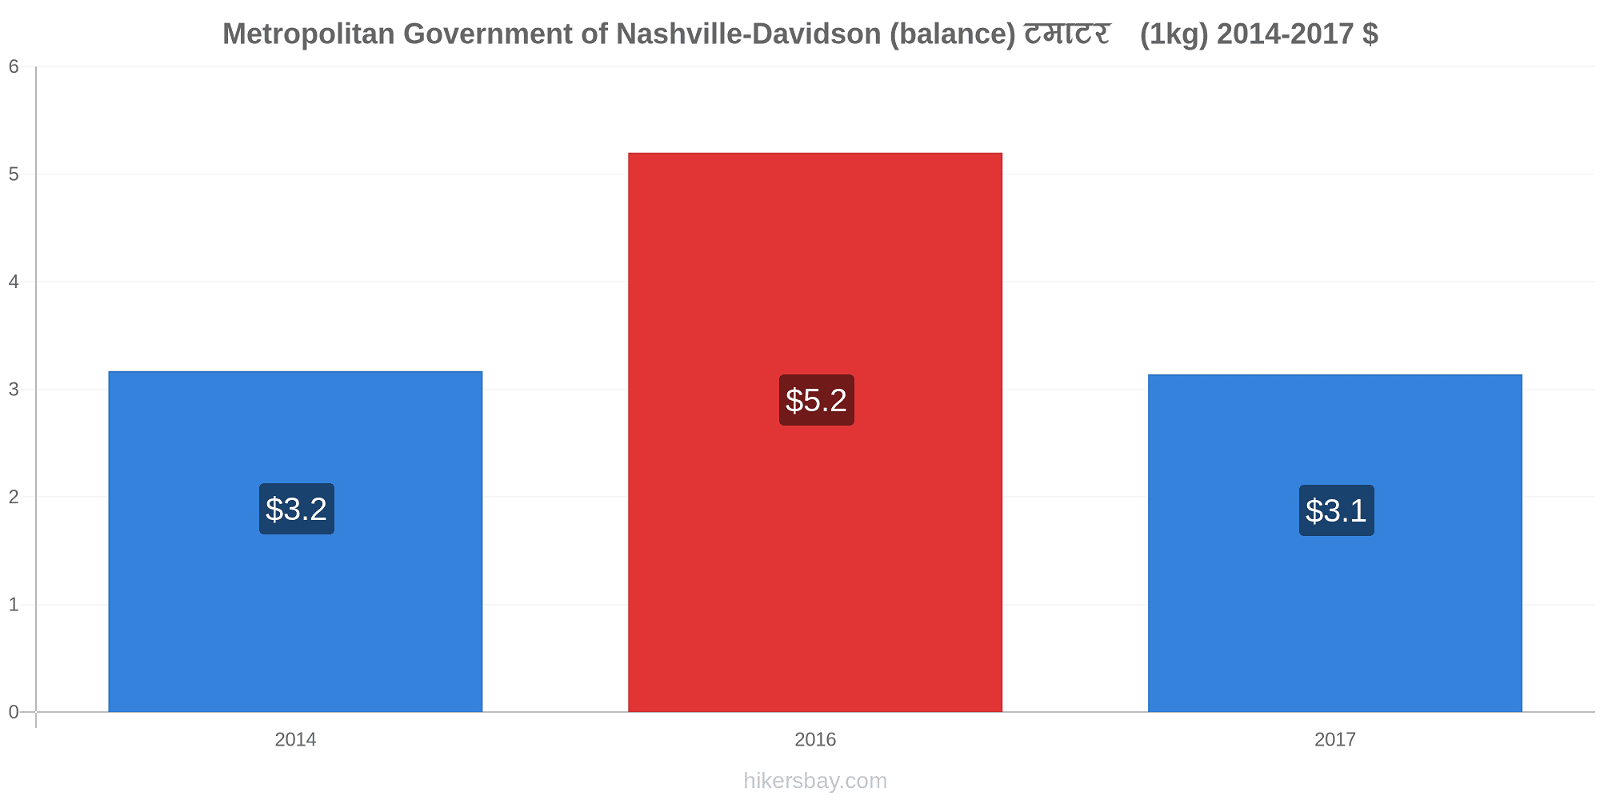 Metropolitan Government of Nashville-Davidson (balance) मूल्य परिवर्तन टमाटर (1kg) hikersbay.com